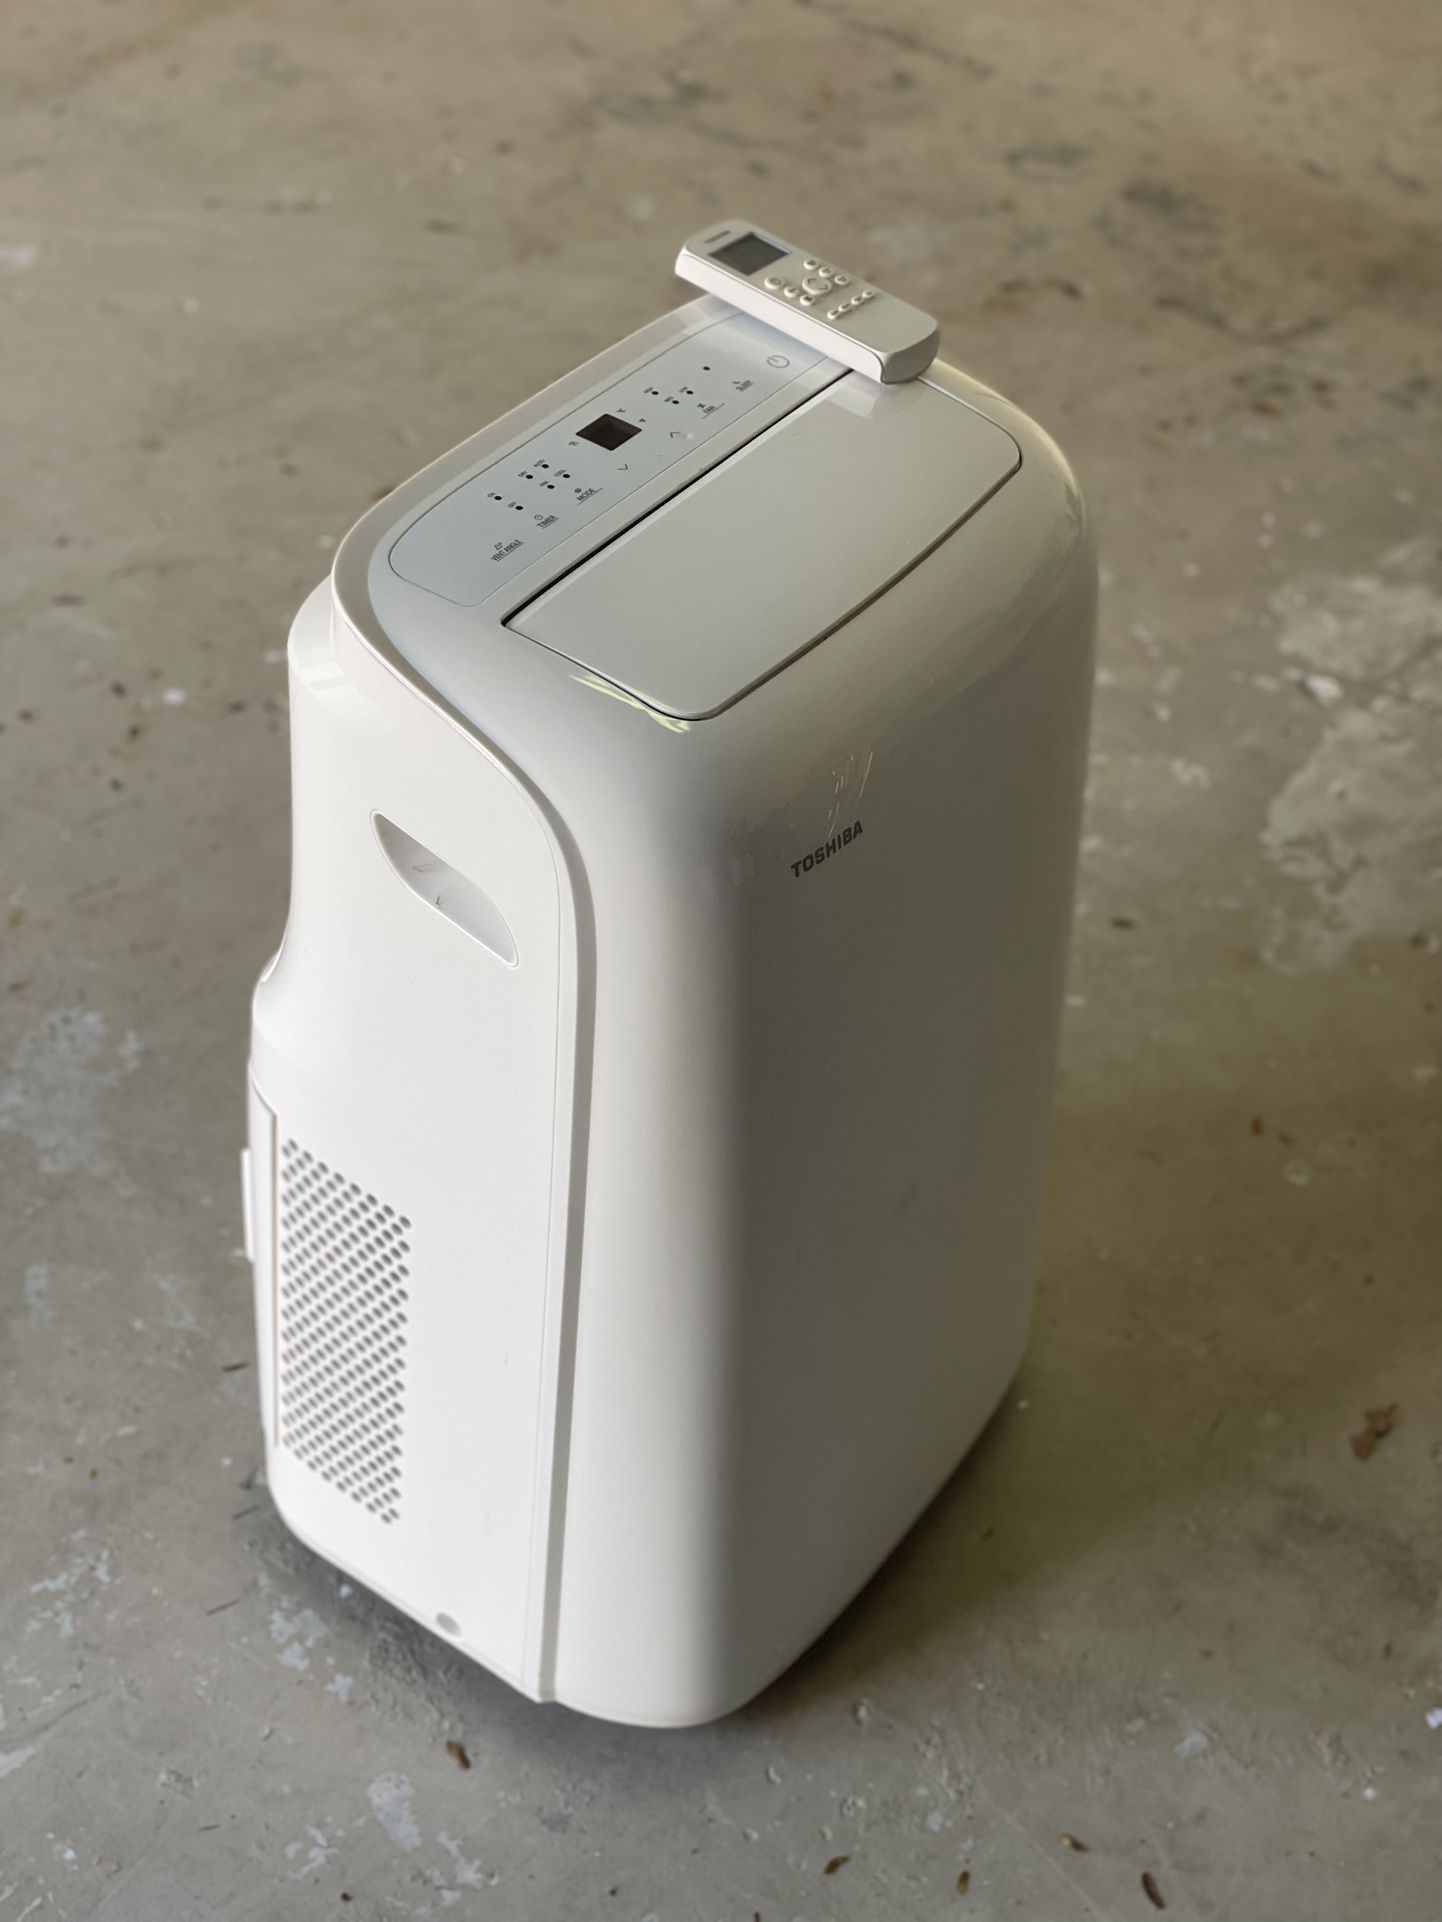 Toshiba Portable AC Unit